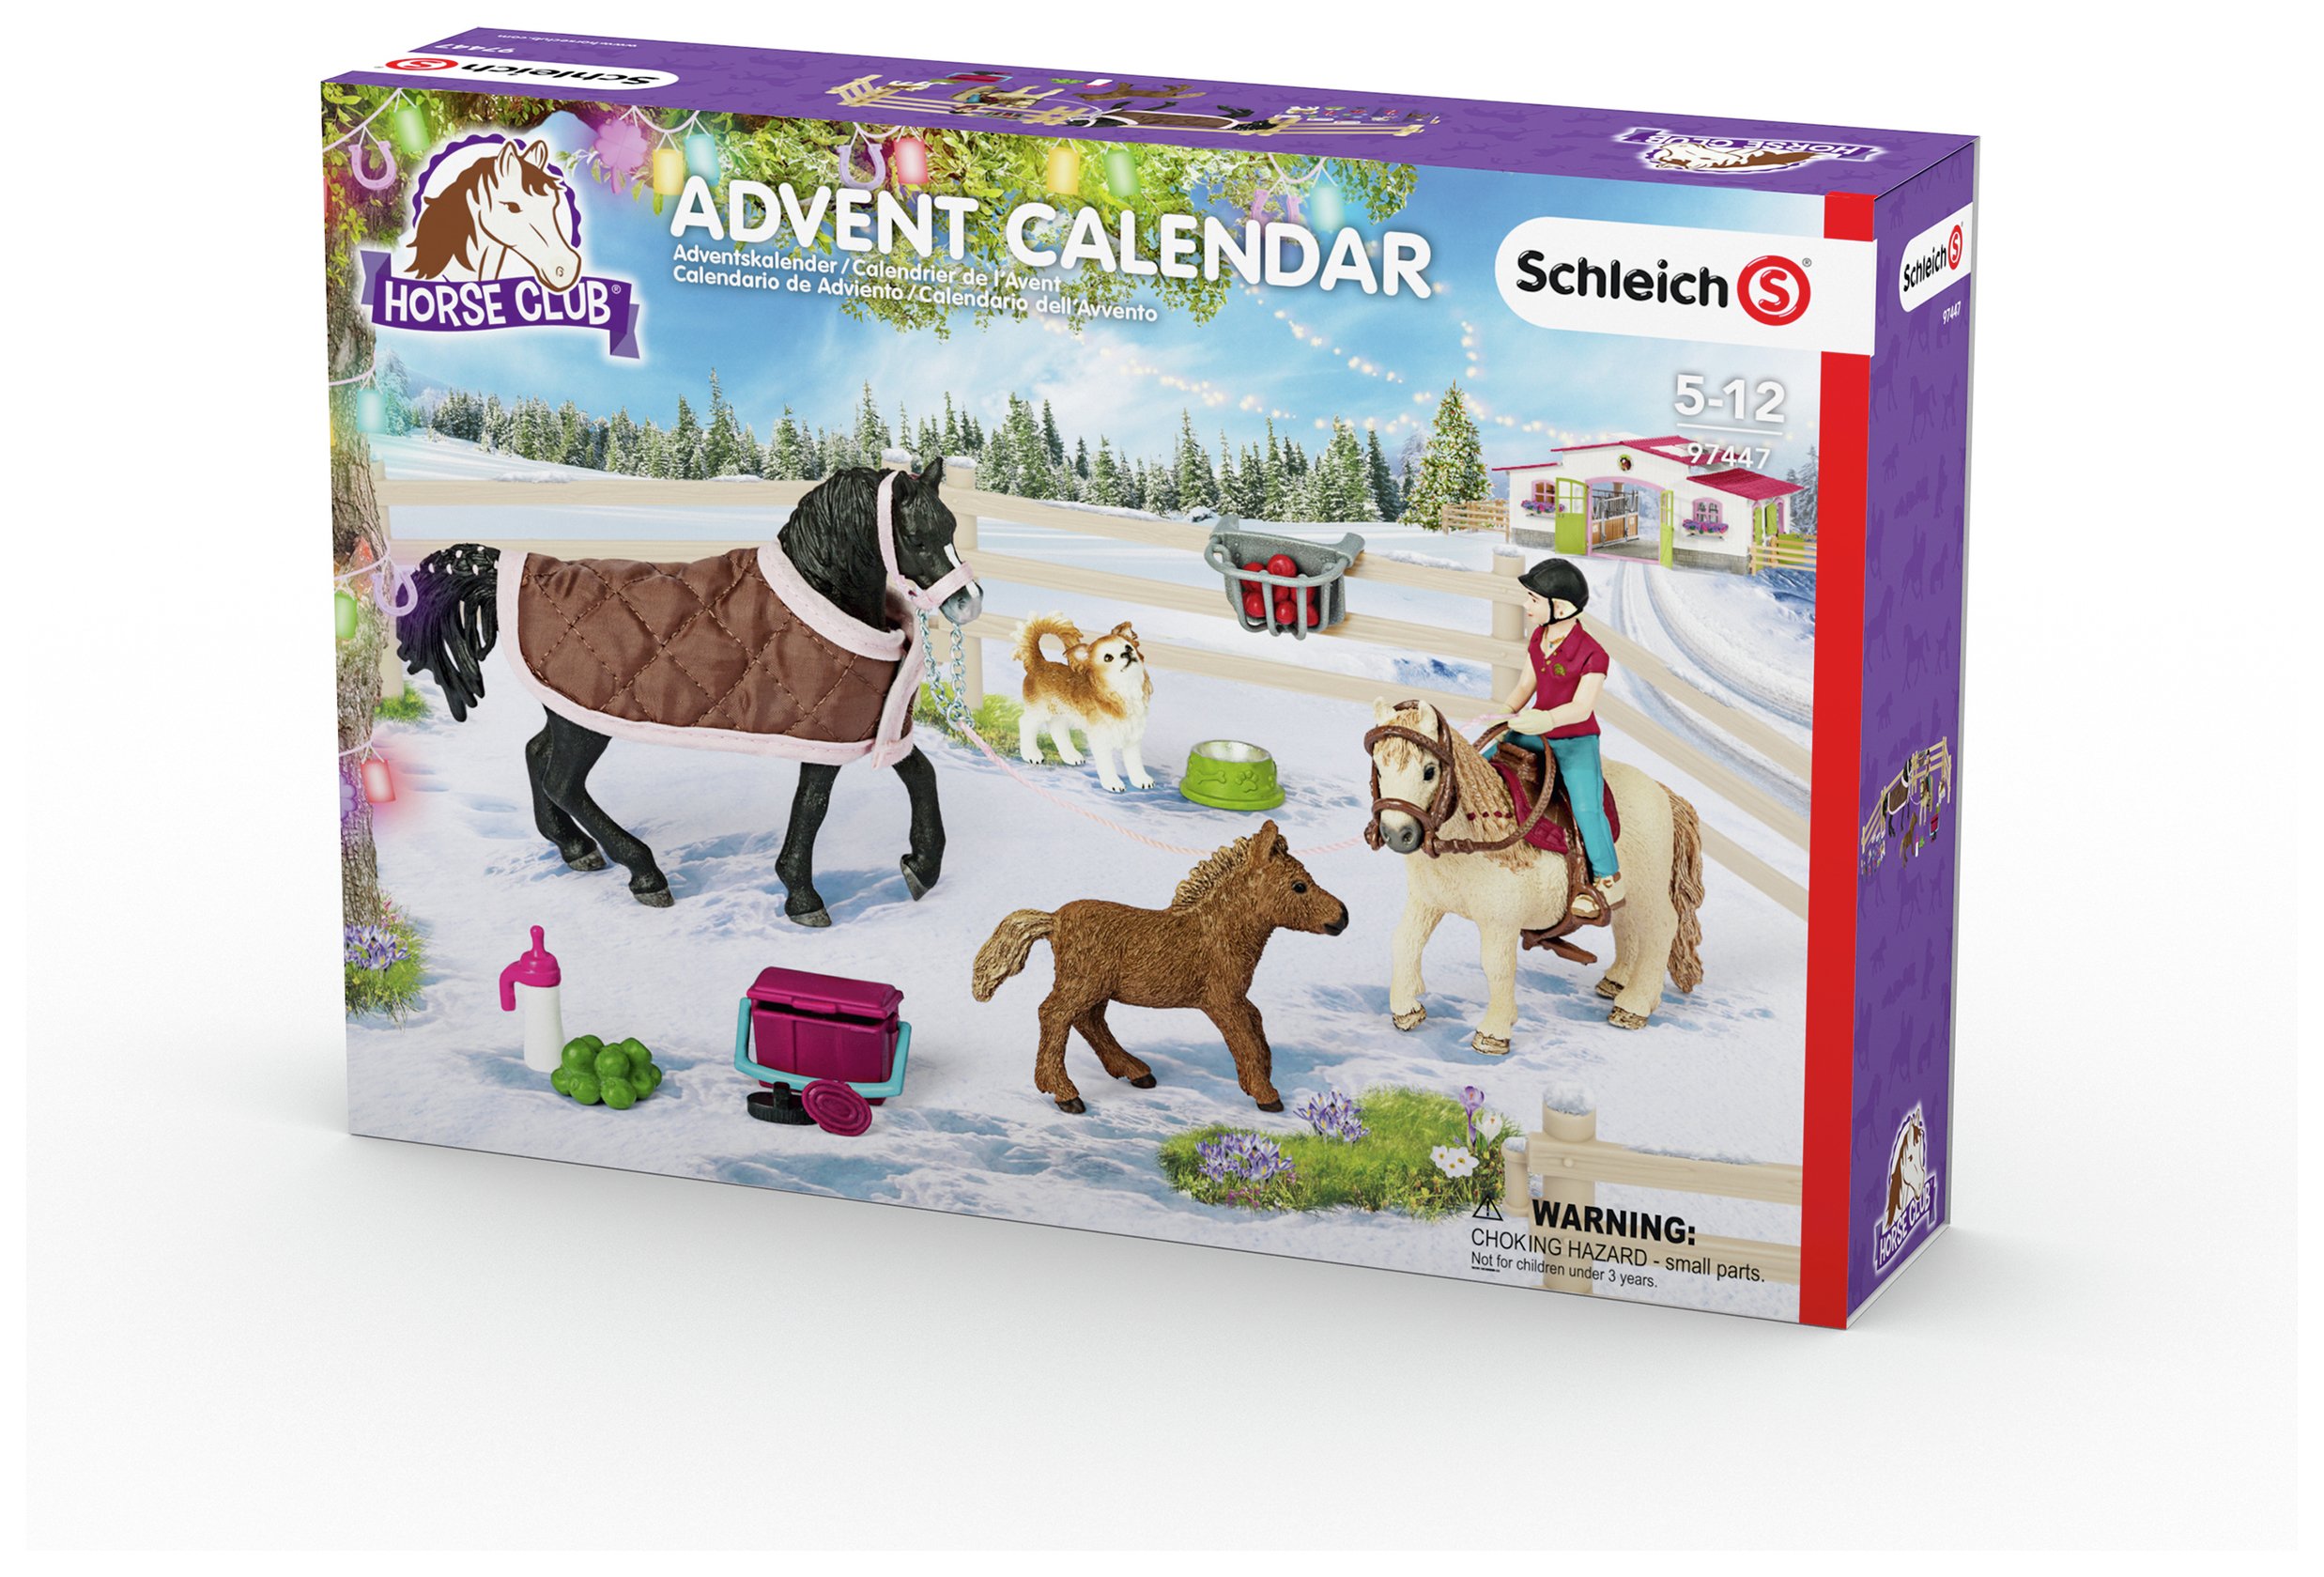 Schleich Horse Club Advent Calendar Reviews